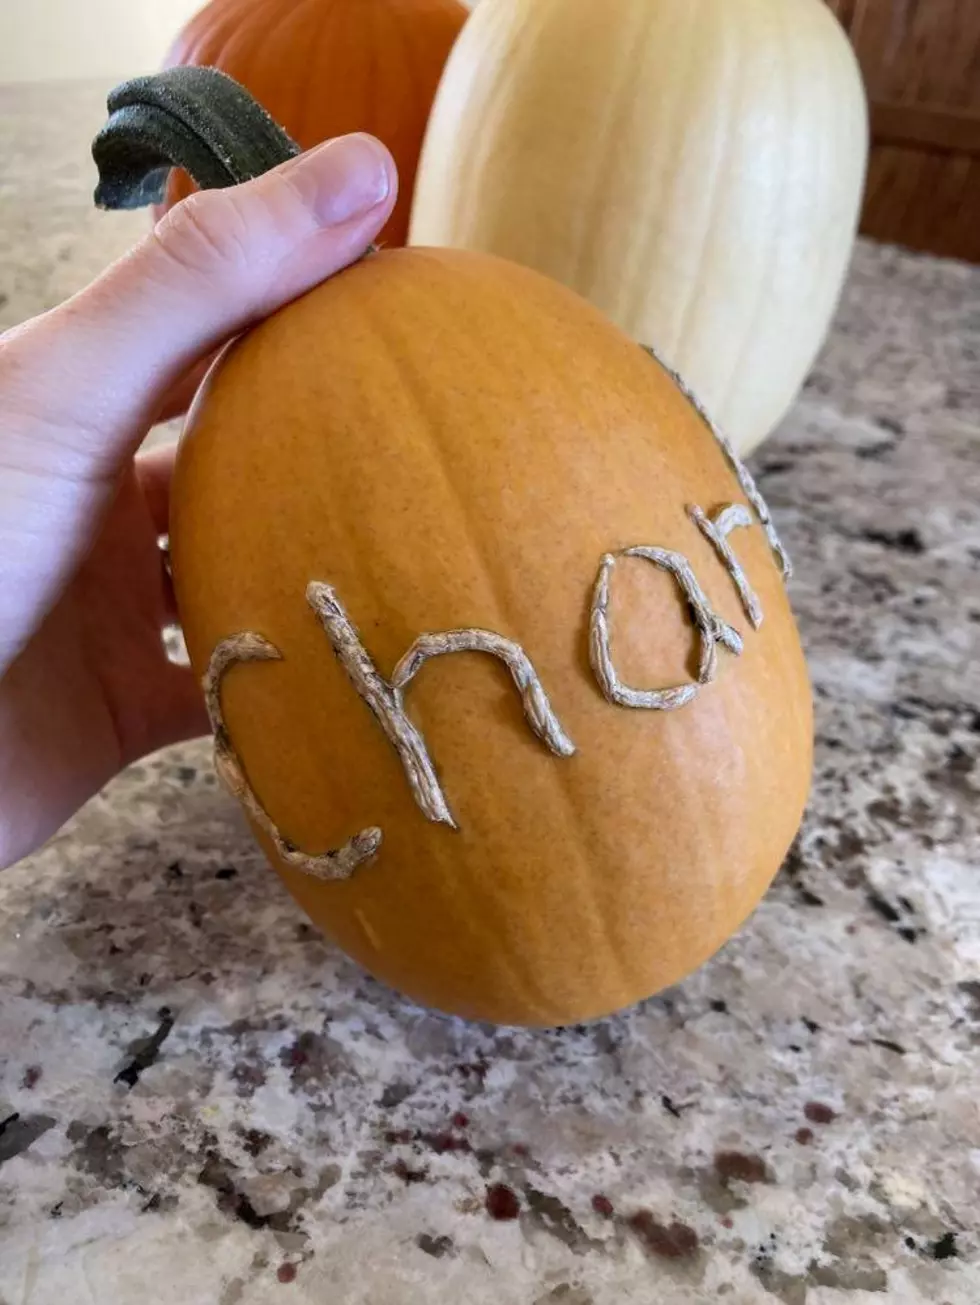 MN Mom’s Amazingly Cool Pumpkin Design Hack